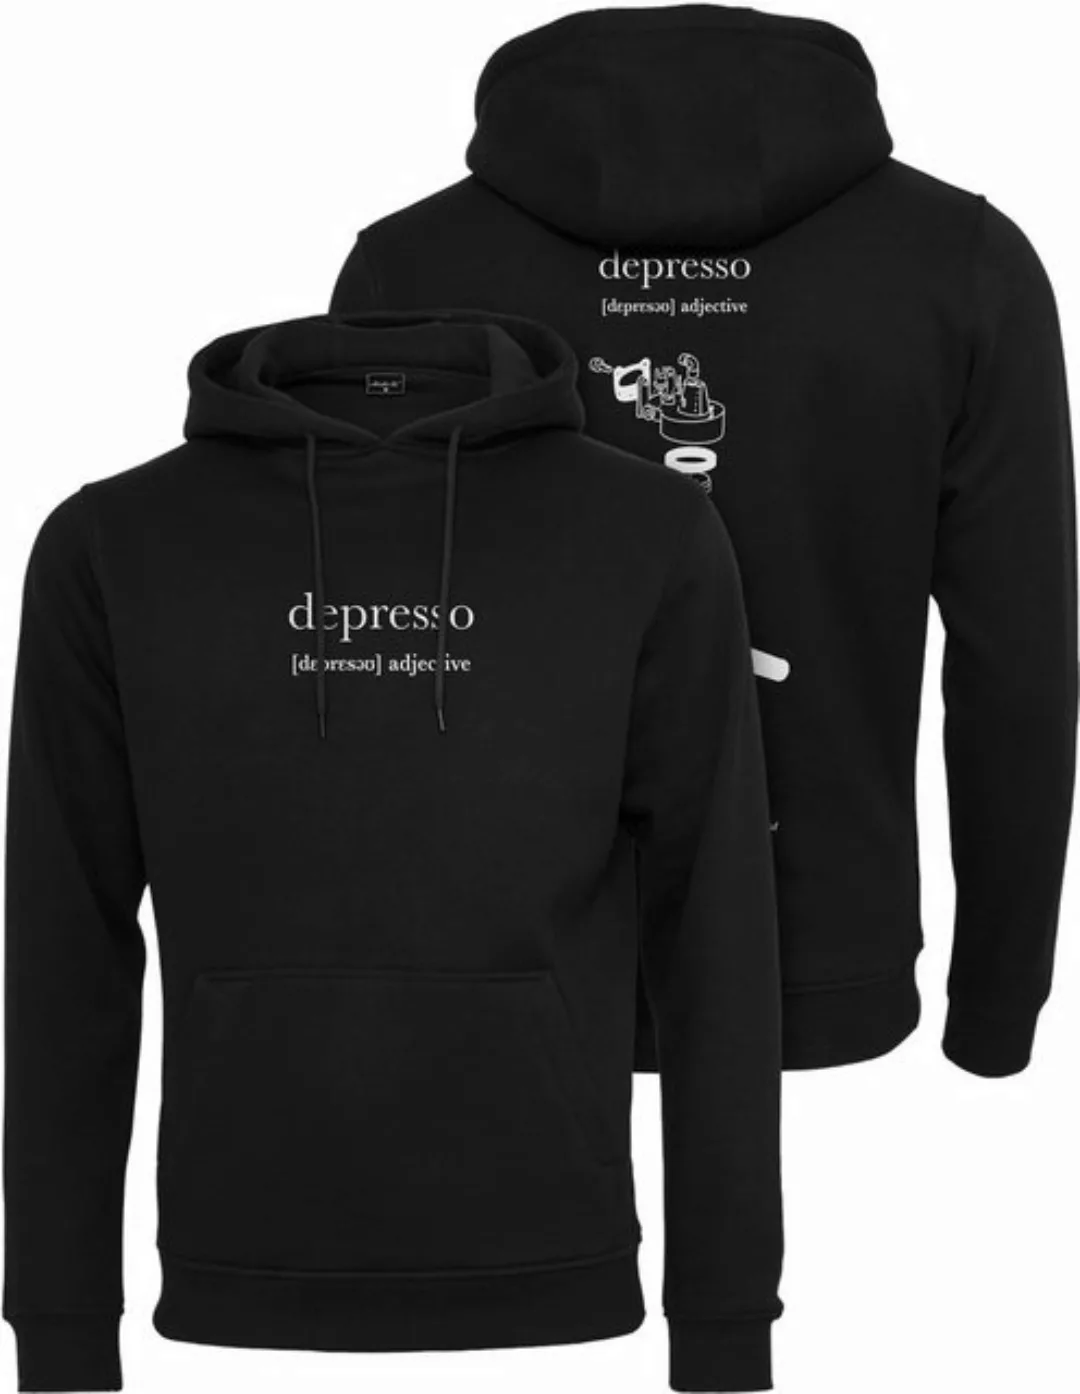 MisterTee Sweatshirt "MisterTee Herren Depresso Hoody" günstig online kaufen